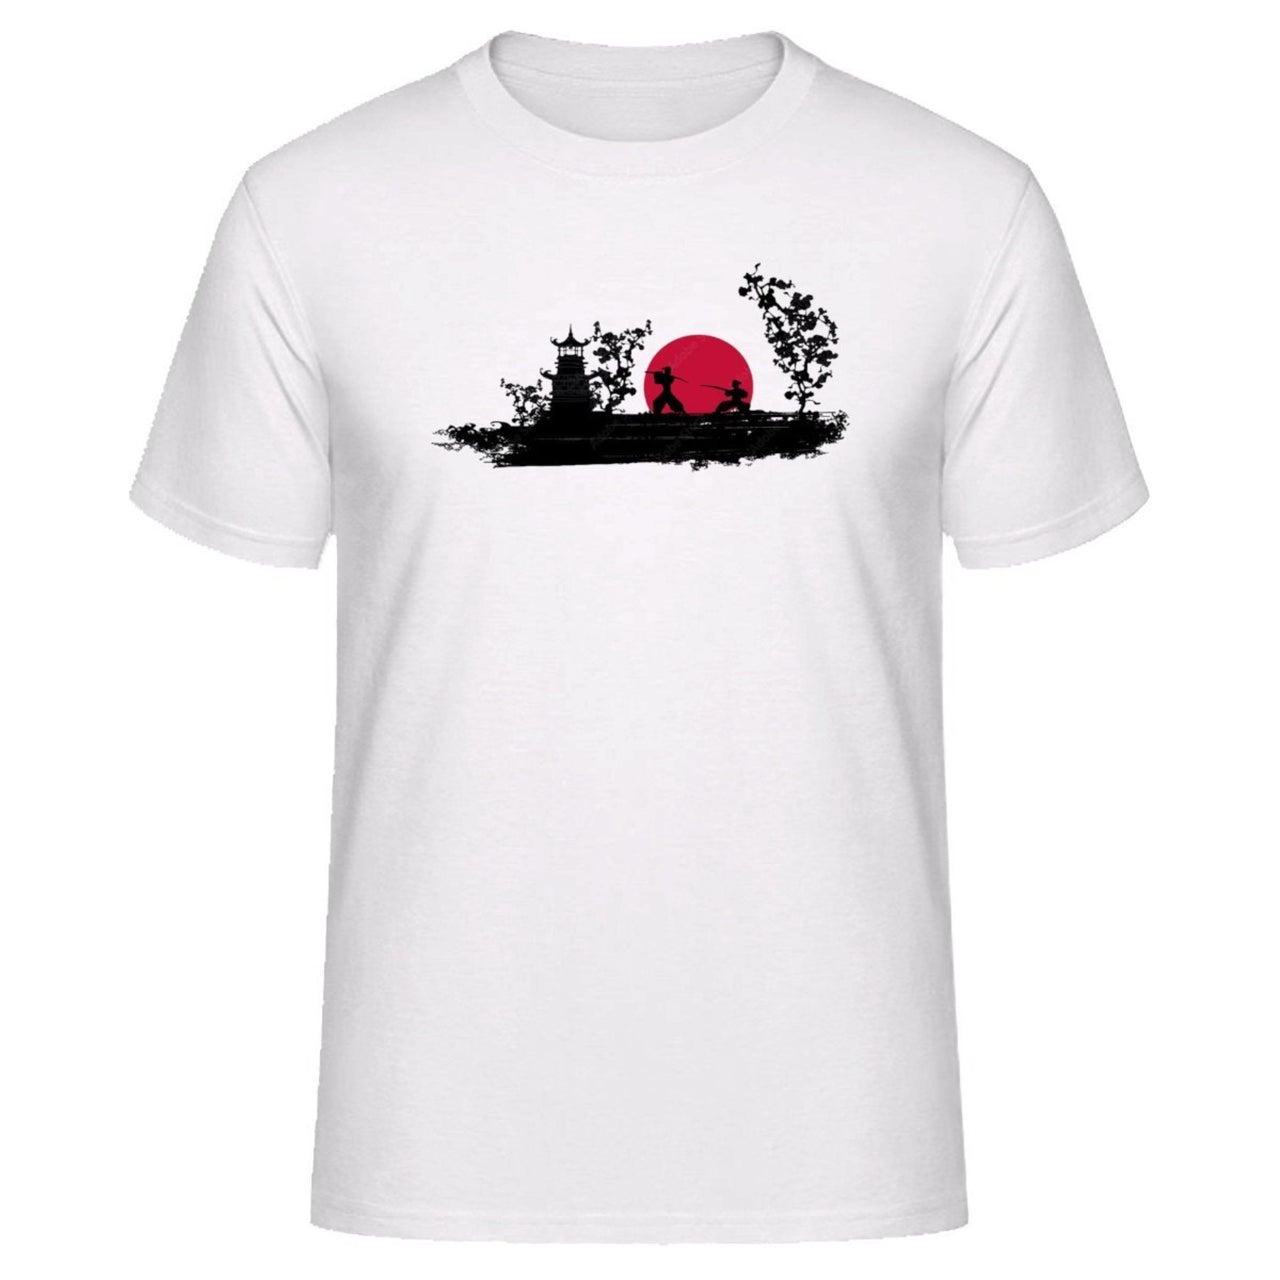 Samurai Warriors Graphic Illustration T-shirt - Clothing - Harvey Ltd